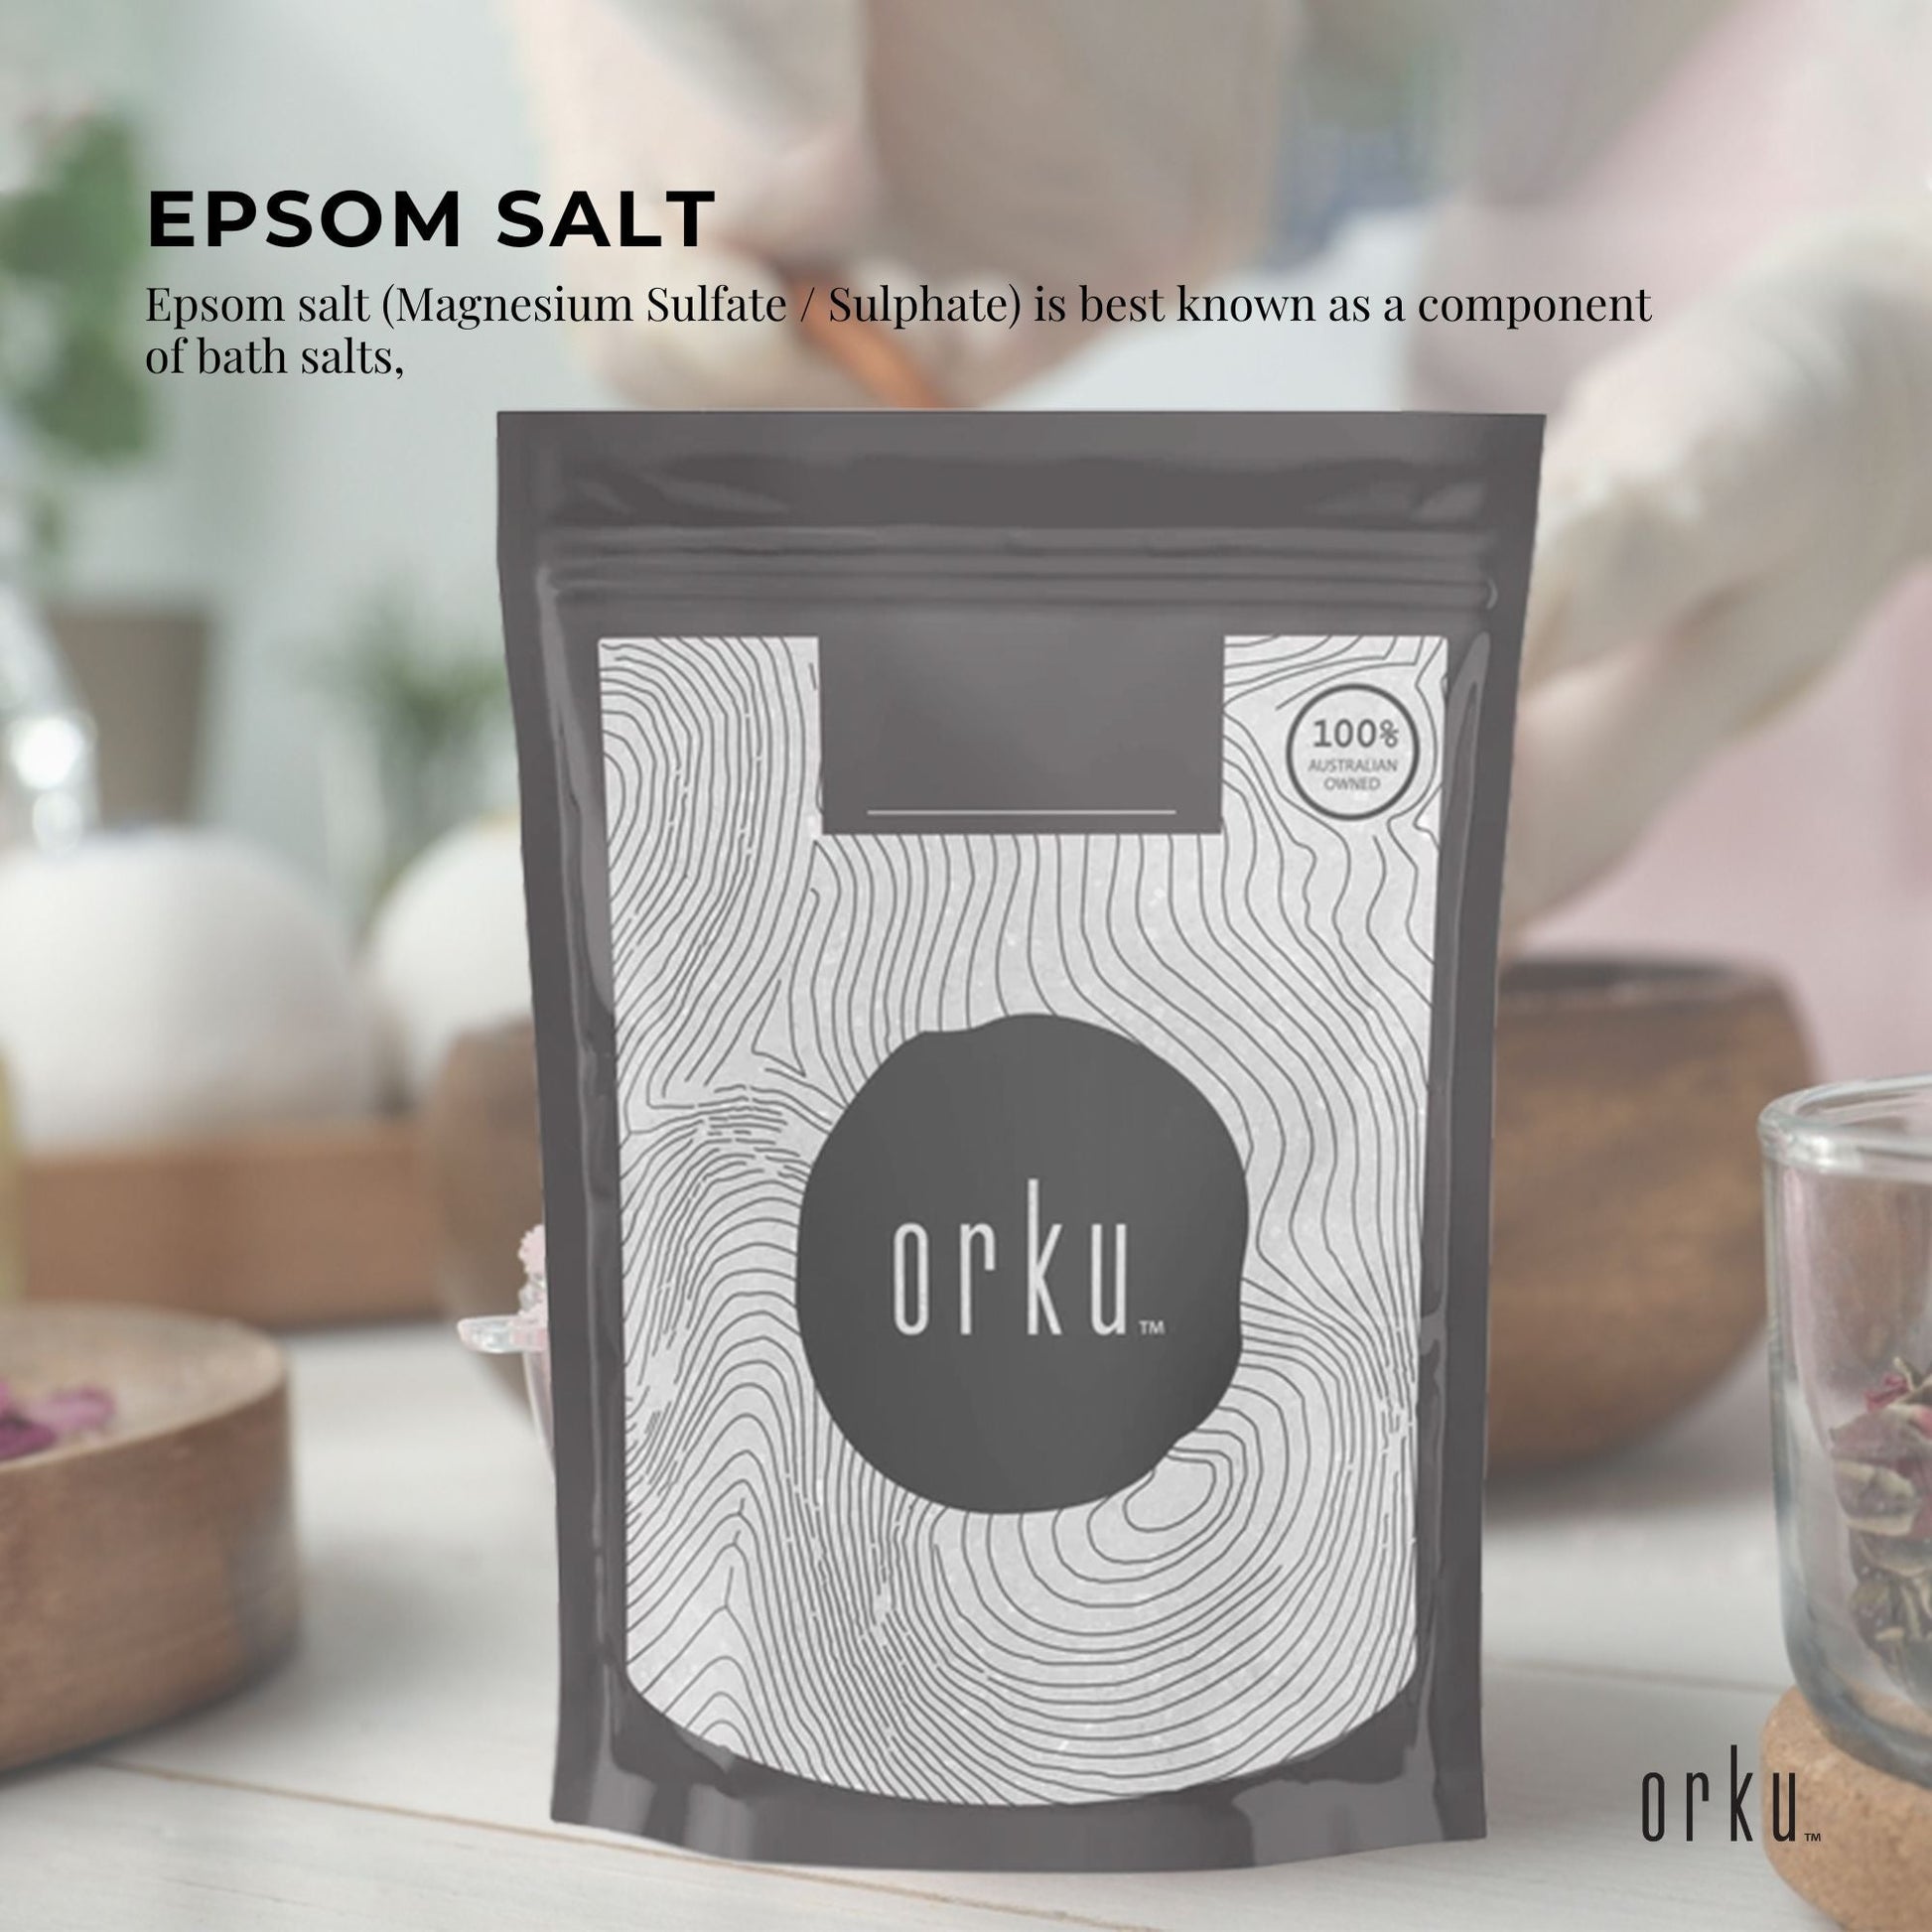 400g Epsom Salt - Magnesium Sulphate Bath Salts For Skin Body Baths Sulfate